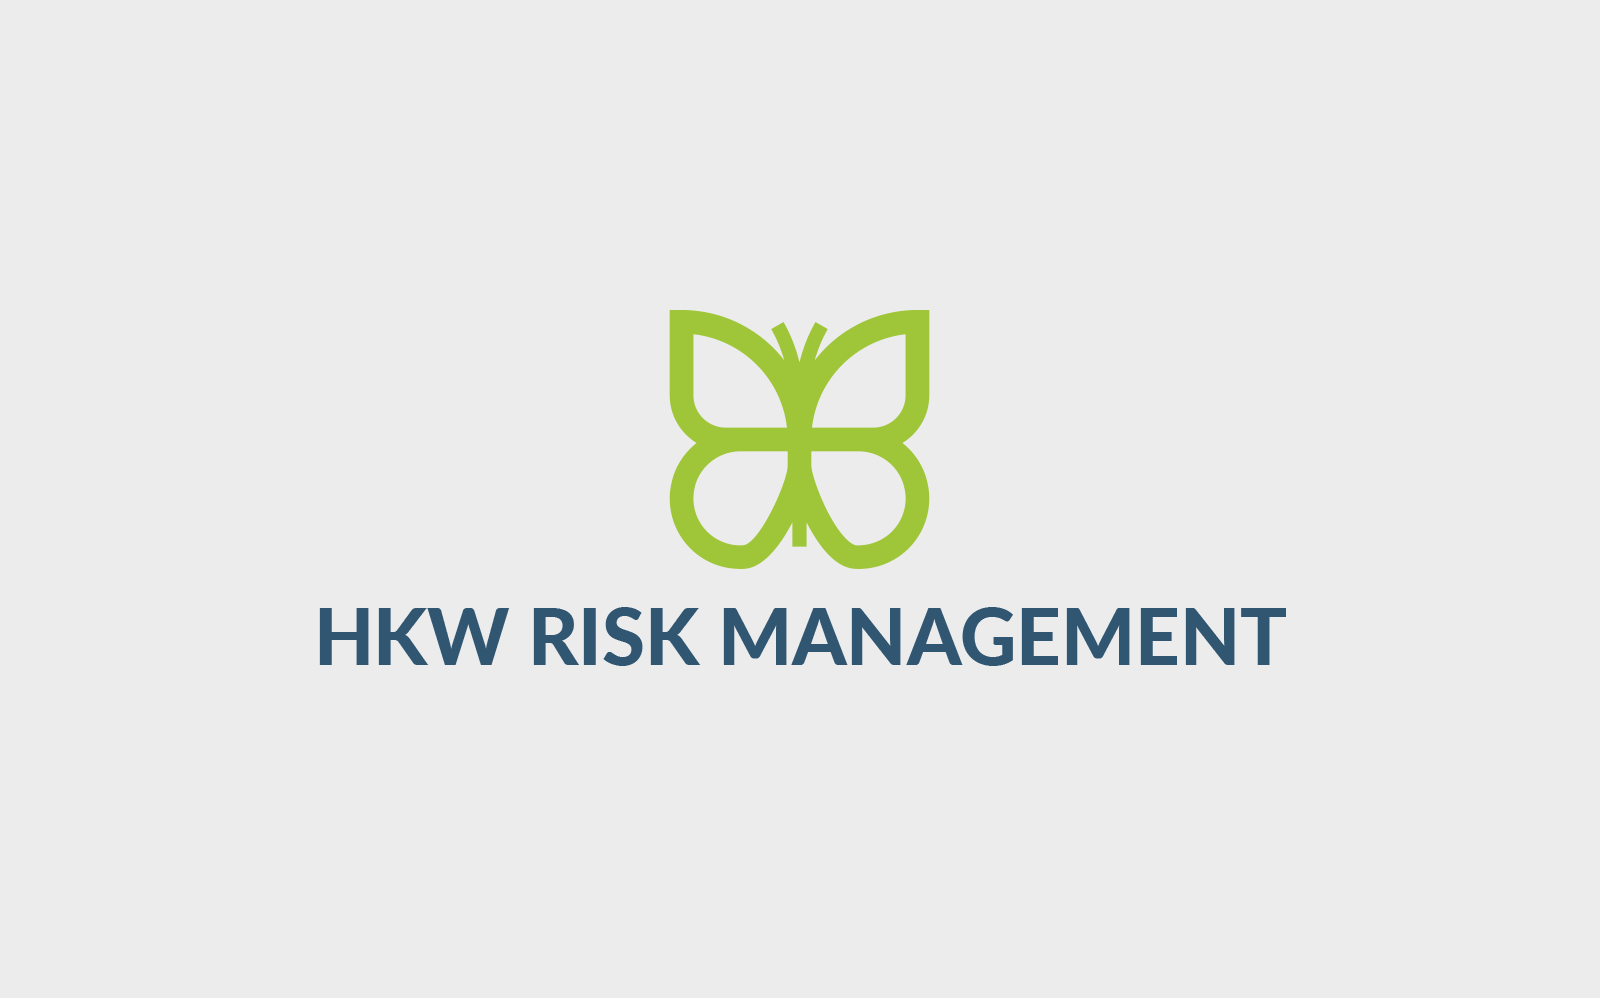 HKW Risk Management small business logo design